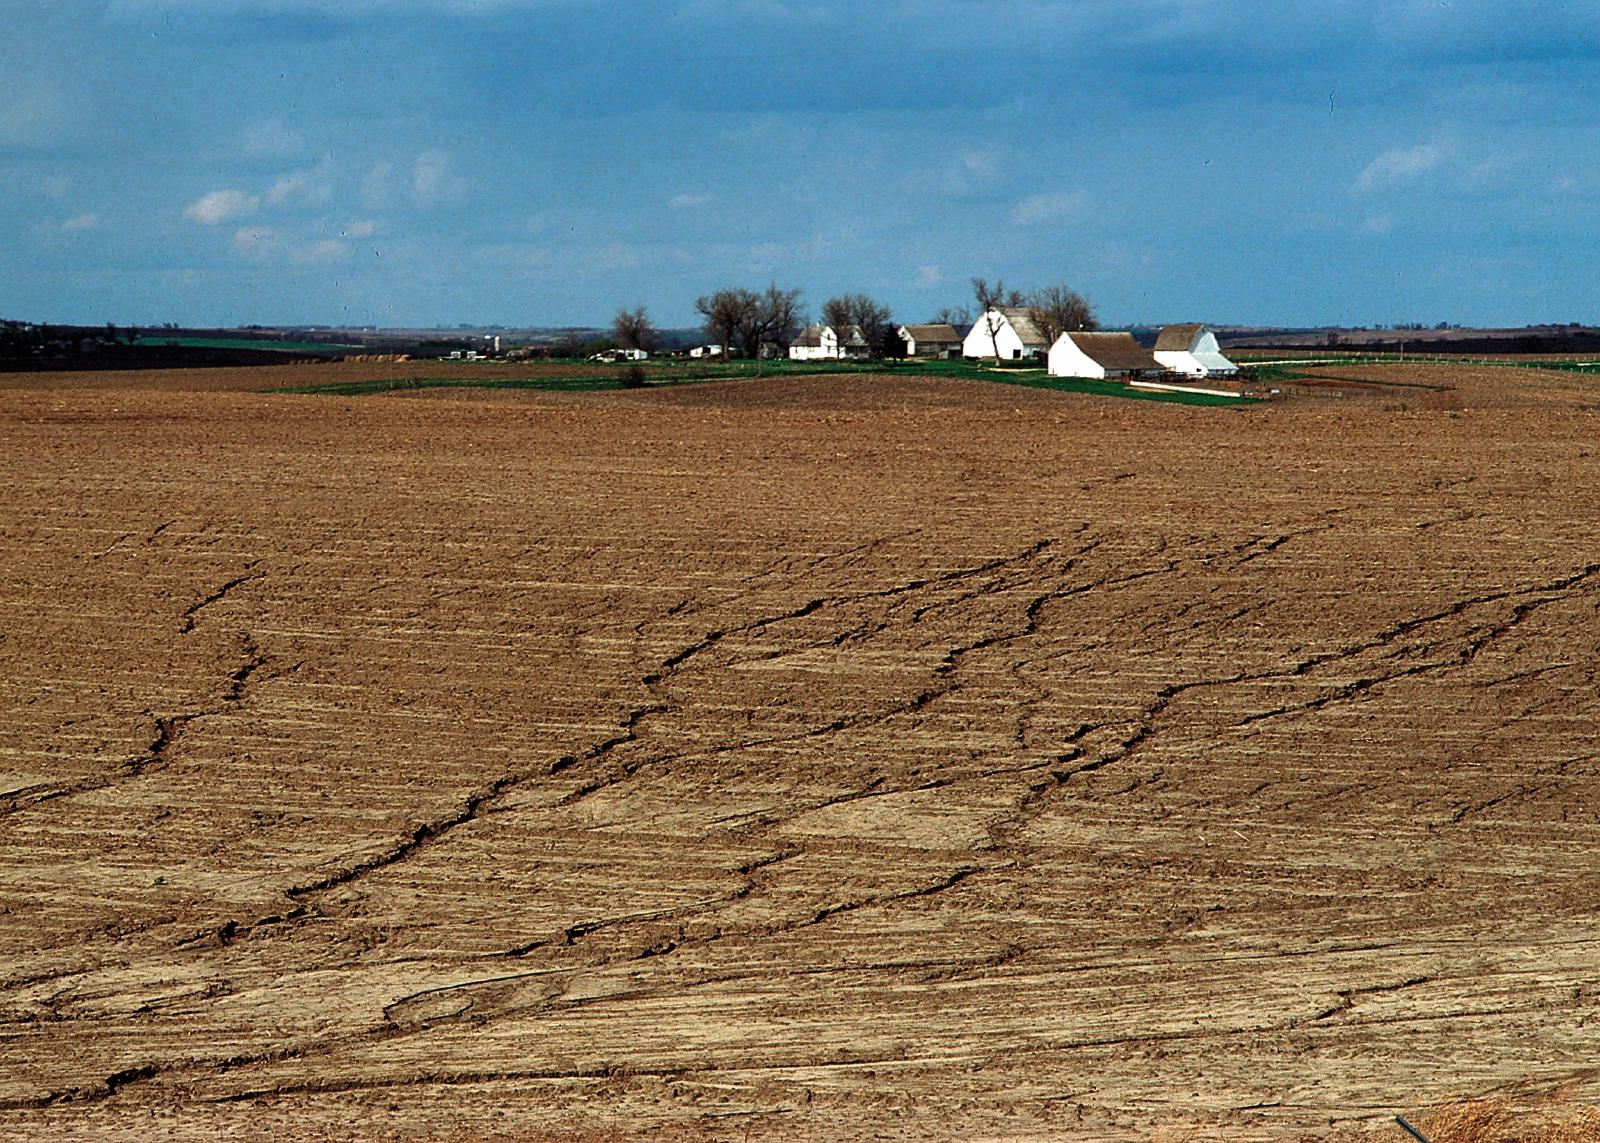 Sheet and rill erosion in Iowa, USA.